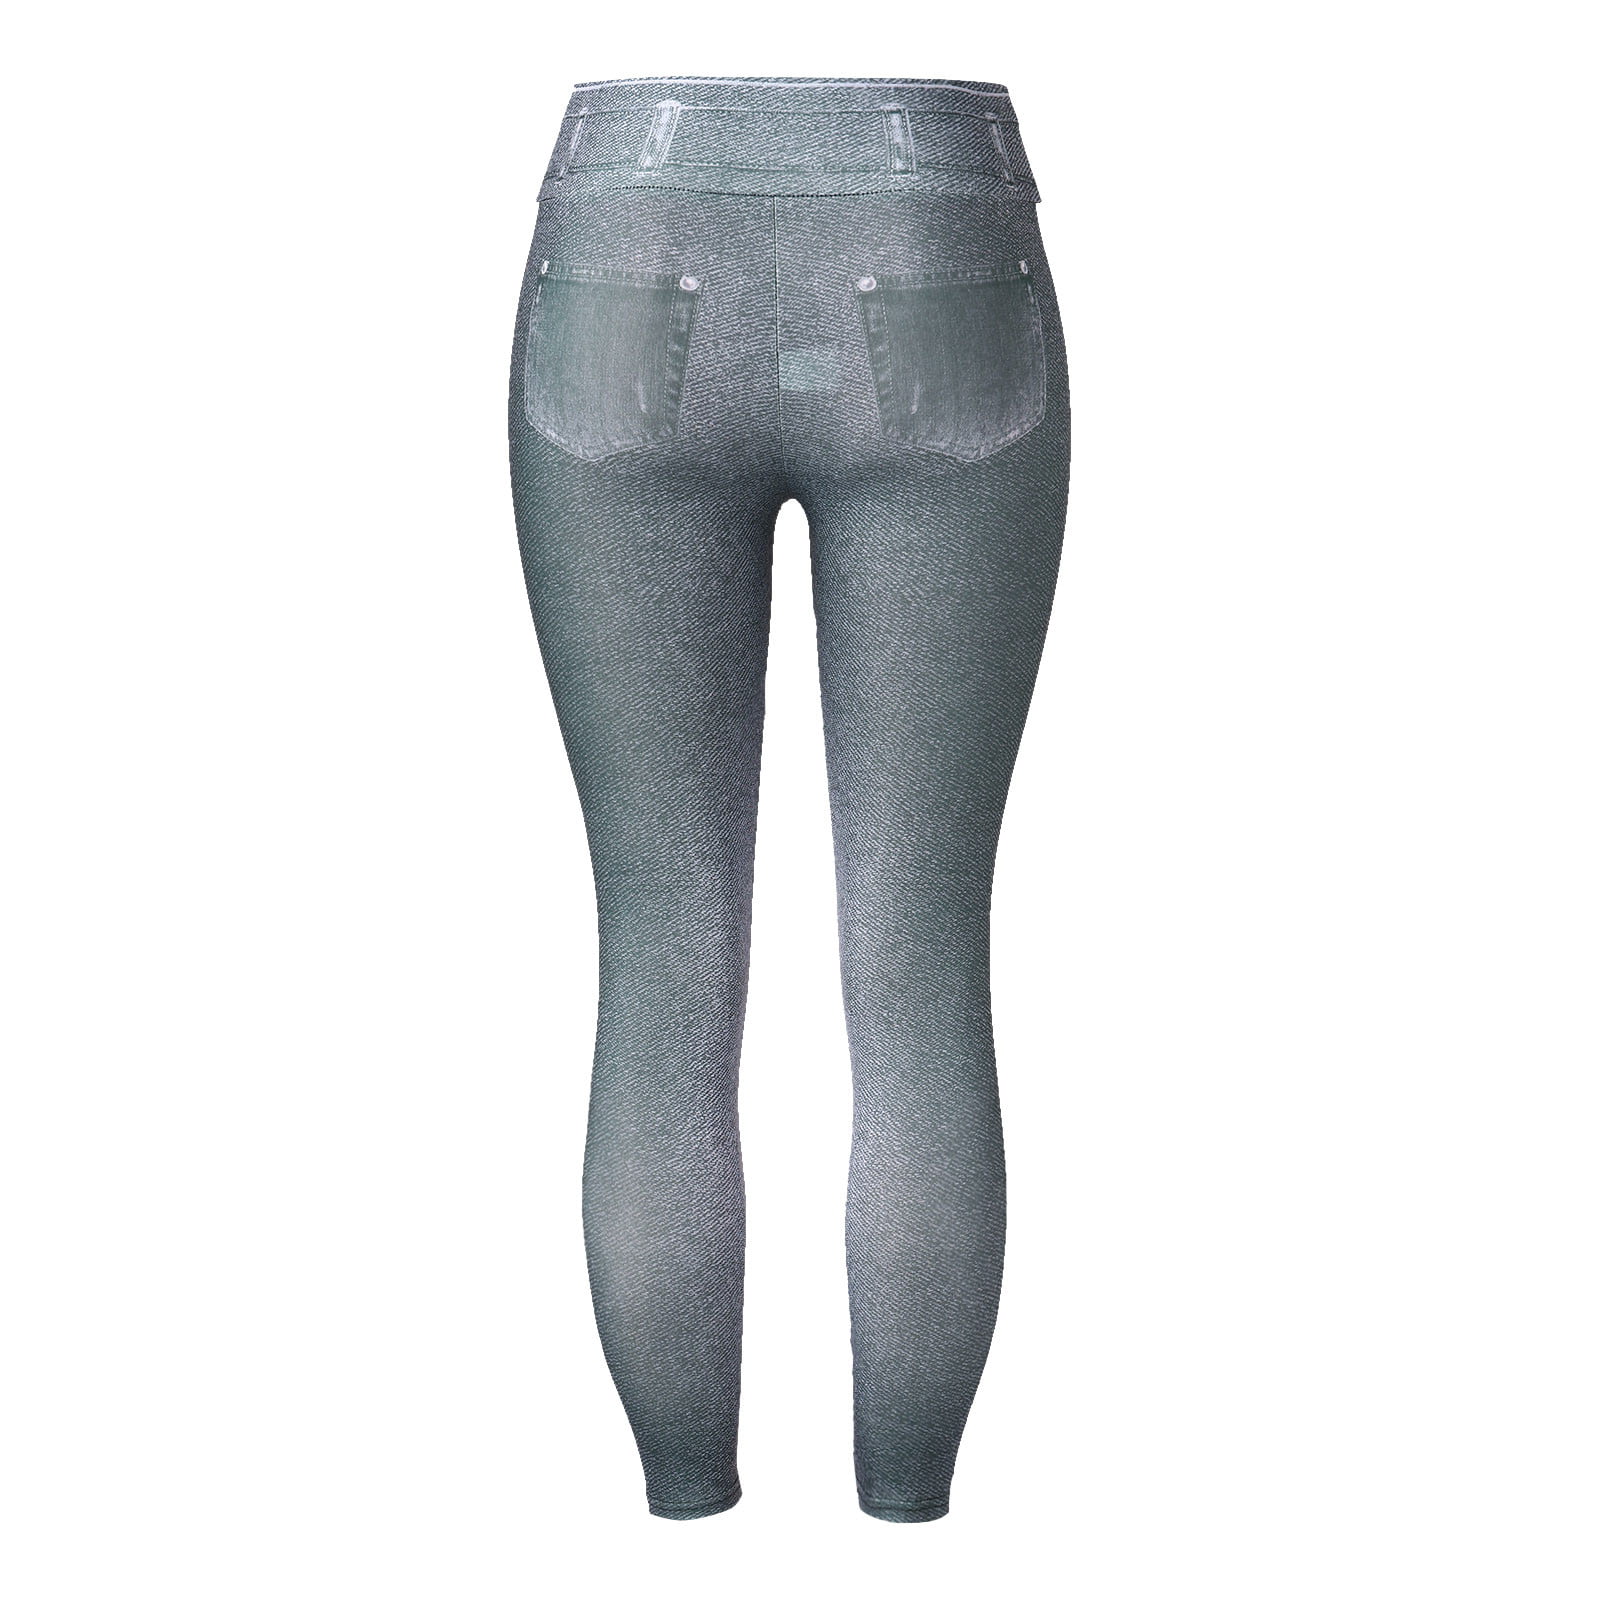 kpoplk Womens Thermal Leggings,Christmas Print Collection High Waist Women's  Leggings Compression Pants Girls Yoga Pants for Running(Grey,L) 